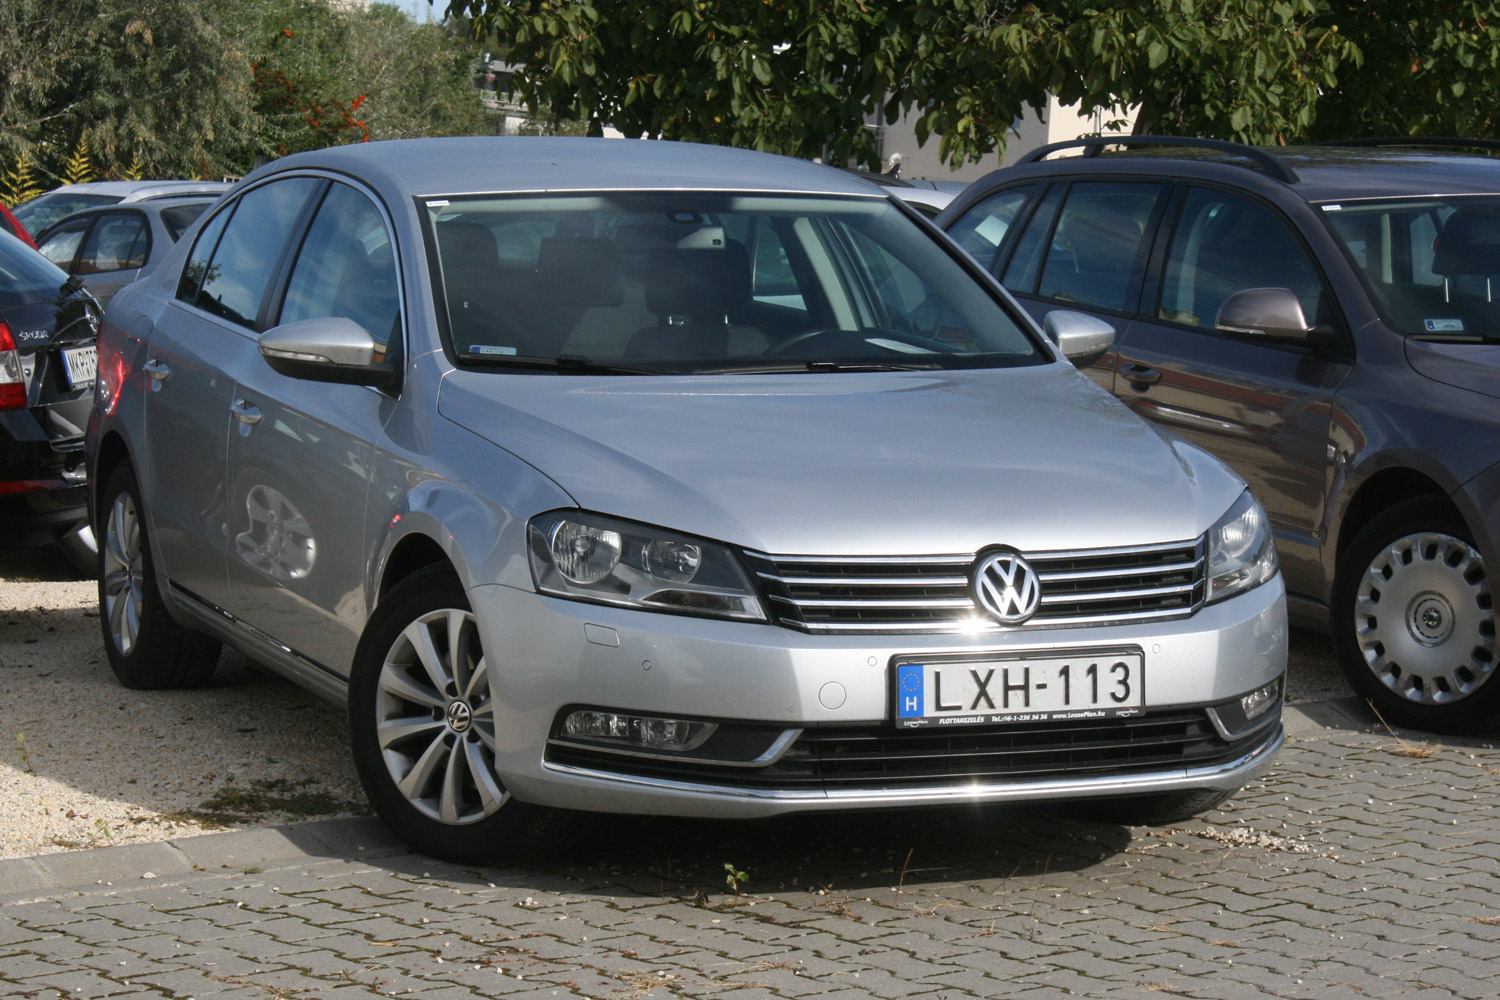 Használt autó: Volkswagen Passat B7 TDI vs. Renault Laguna III dCi 20